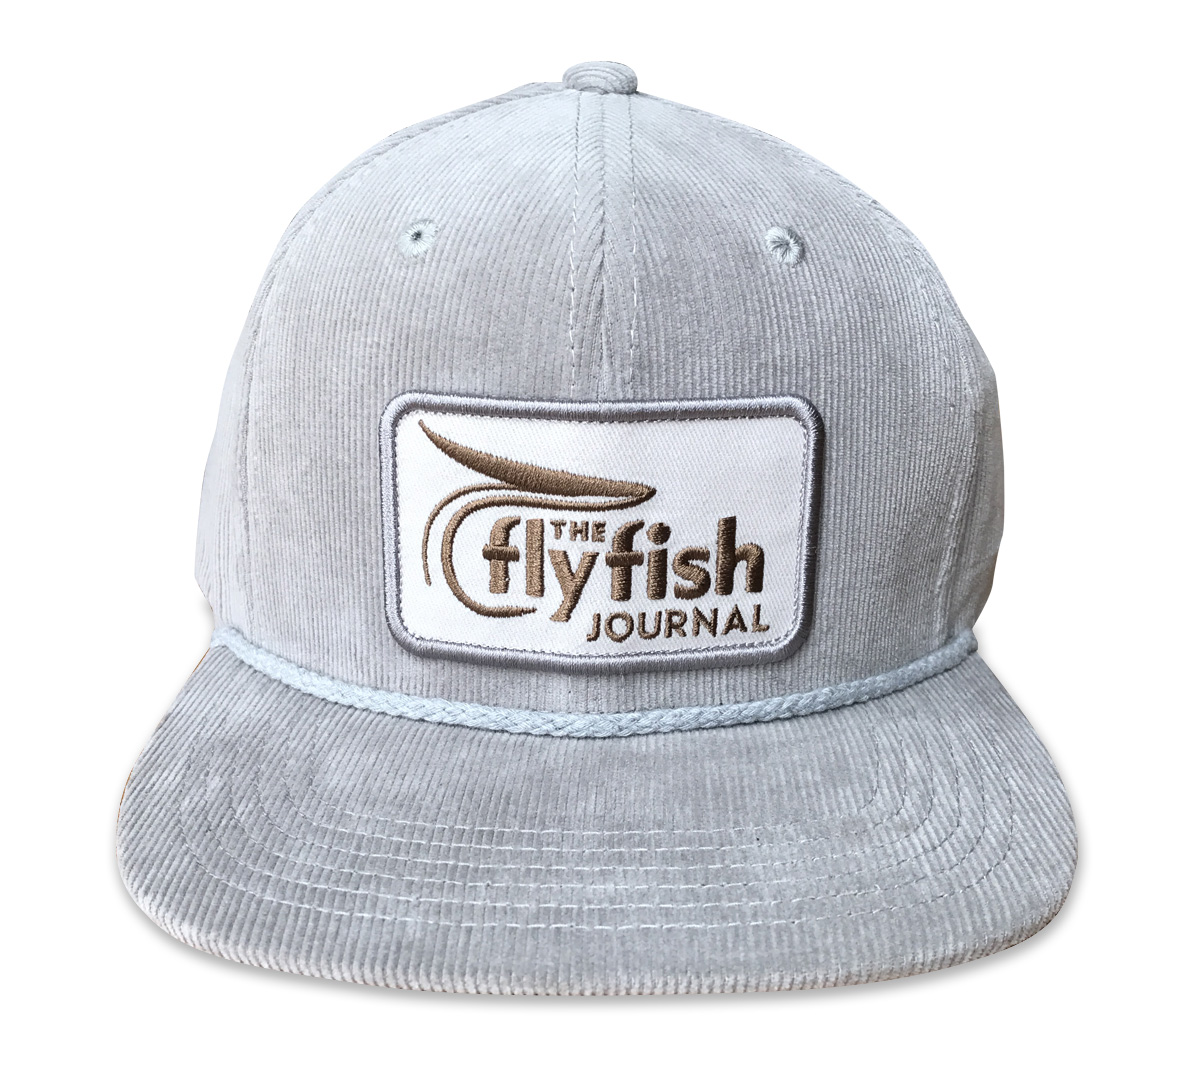 Howler x TFFJ Gray Corduroy Hat - The FlyFish Journal